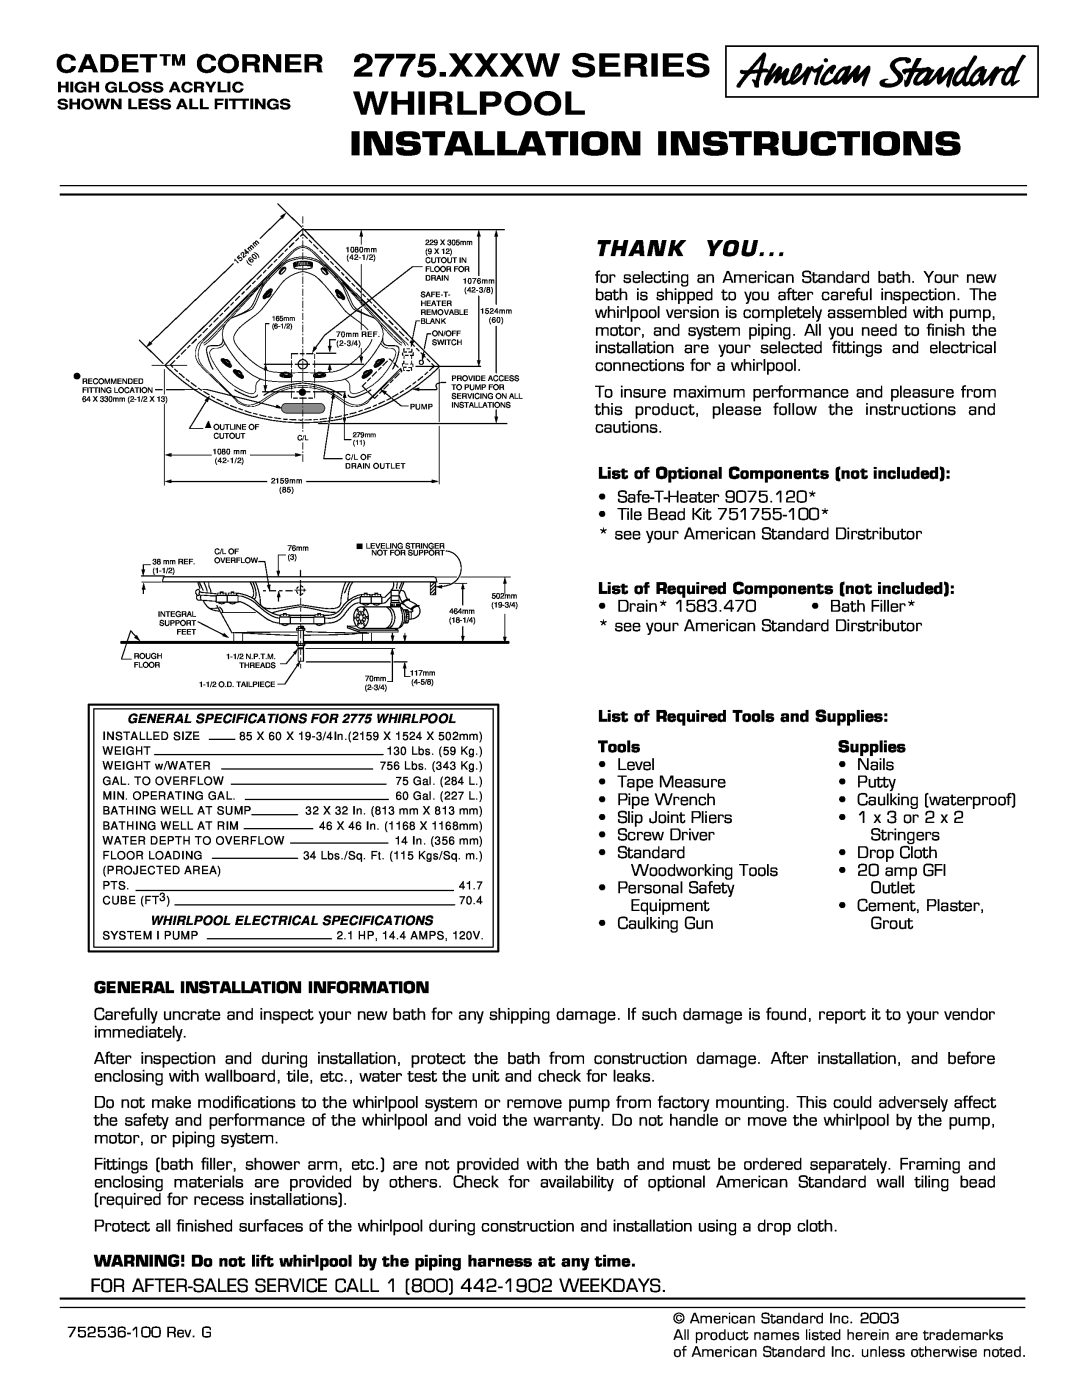 American Standard 2775.XXXW Series installation instructions Xxxw Series Whirlpool, Installation Instructions, Thank You 